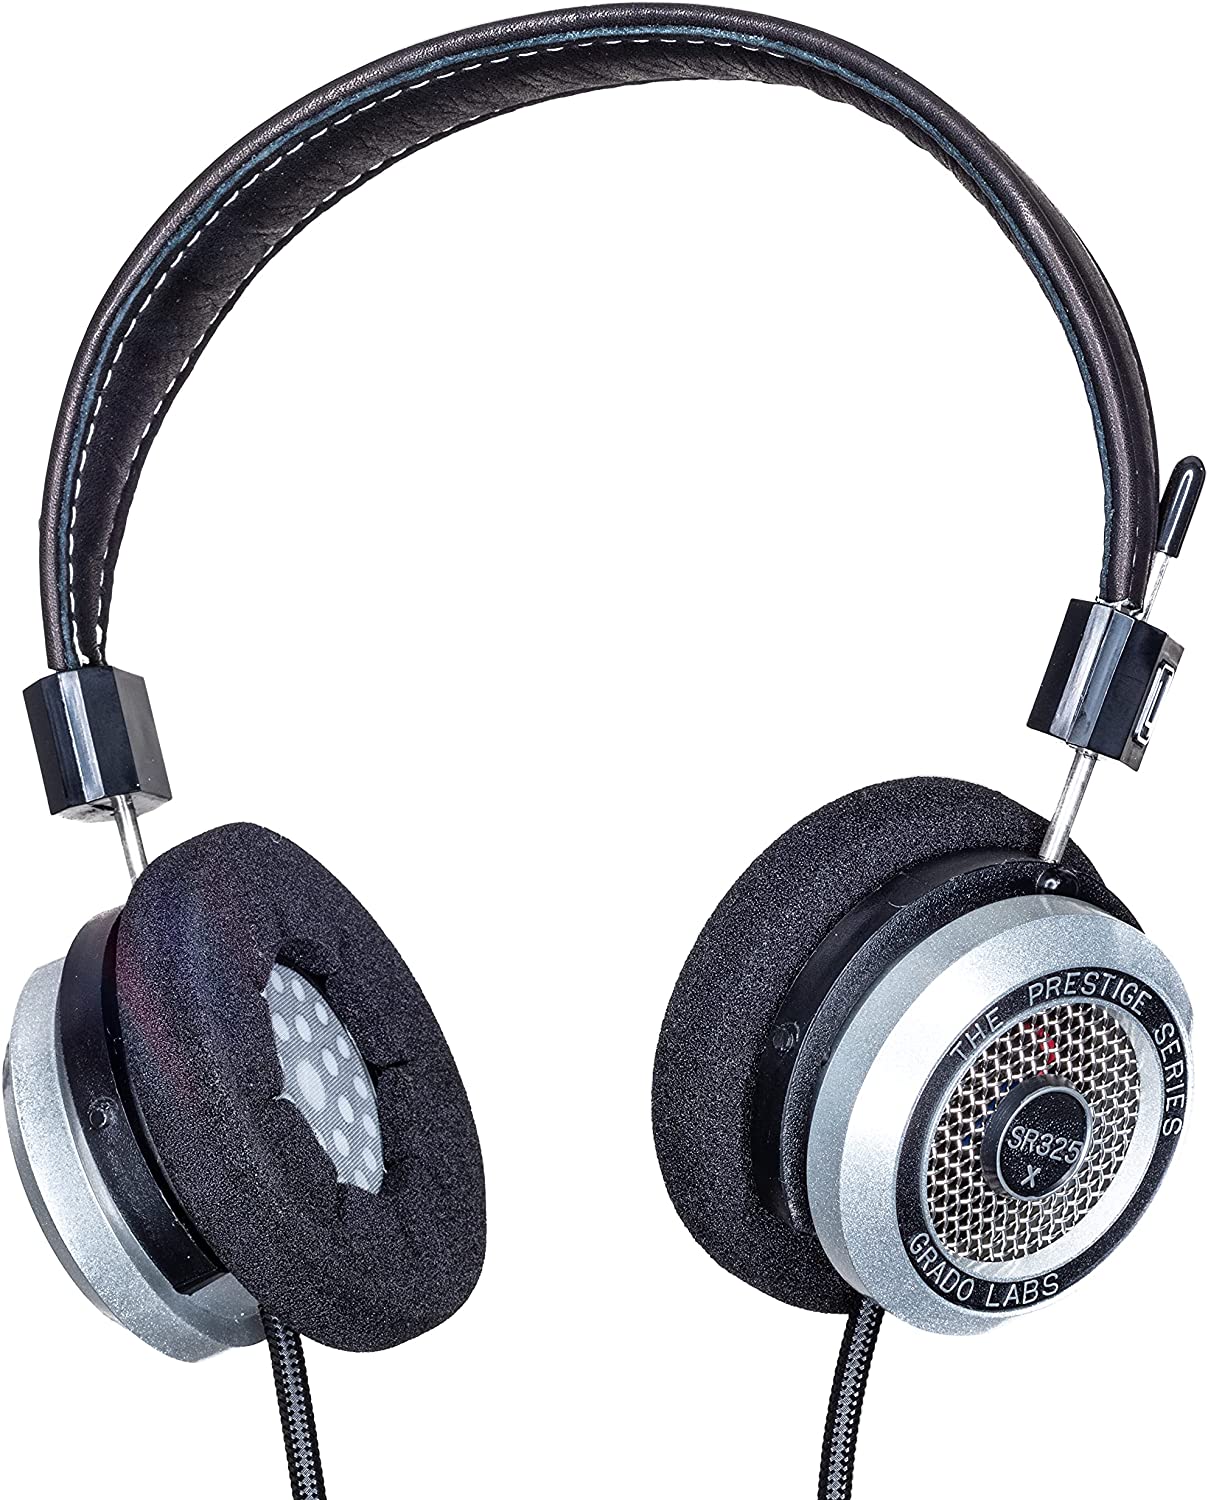 GRADO SR325x Stereo Headphones, Wired, Dynamic Drivers, Open Back Design